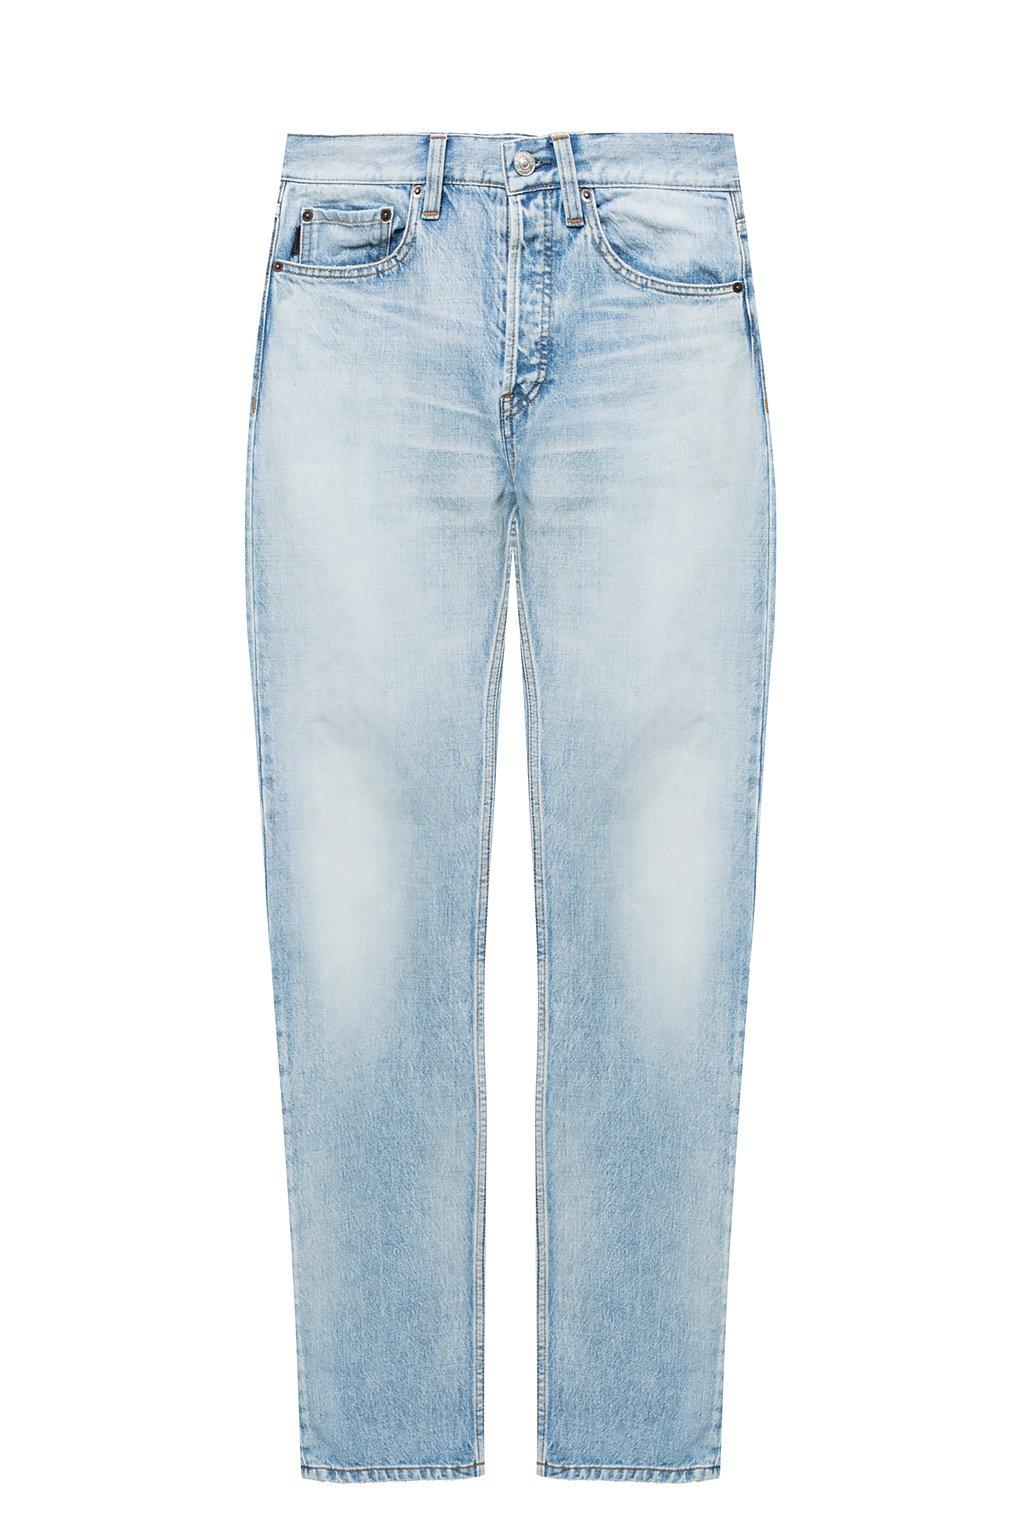 Balenciaga Denim Branded Jeans in Blue for Men - Lyst